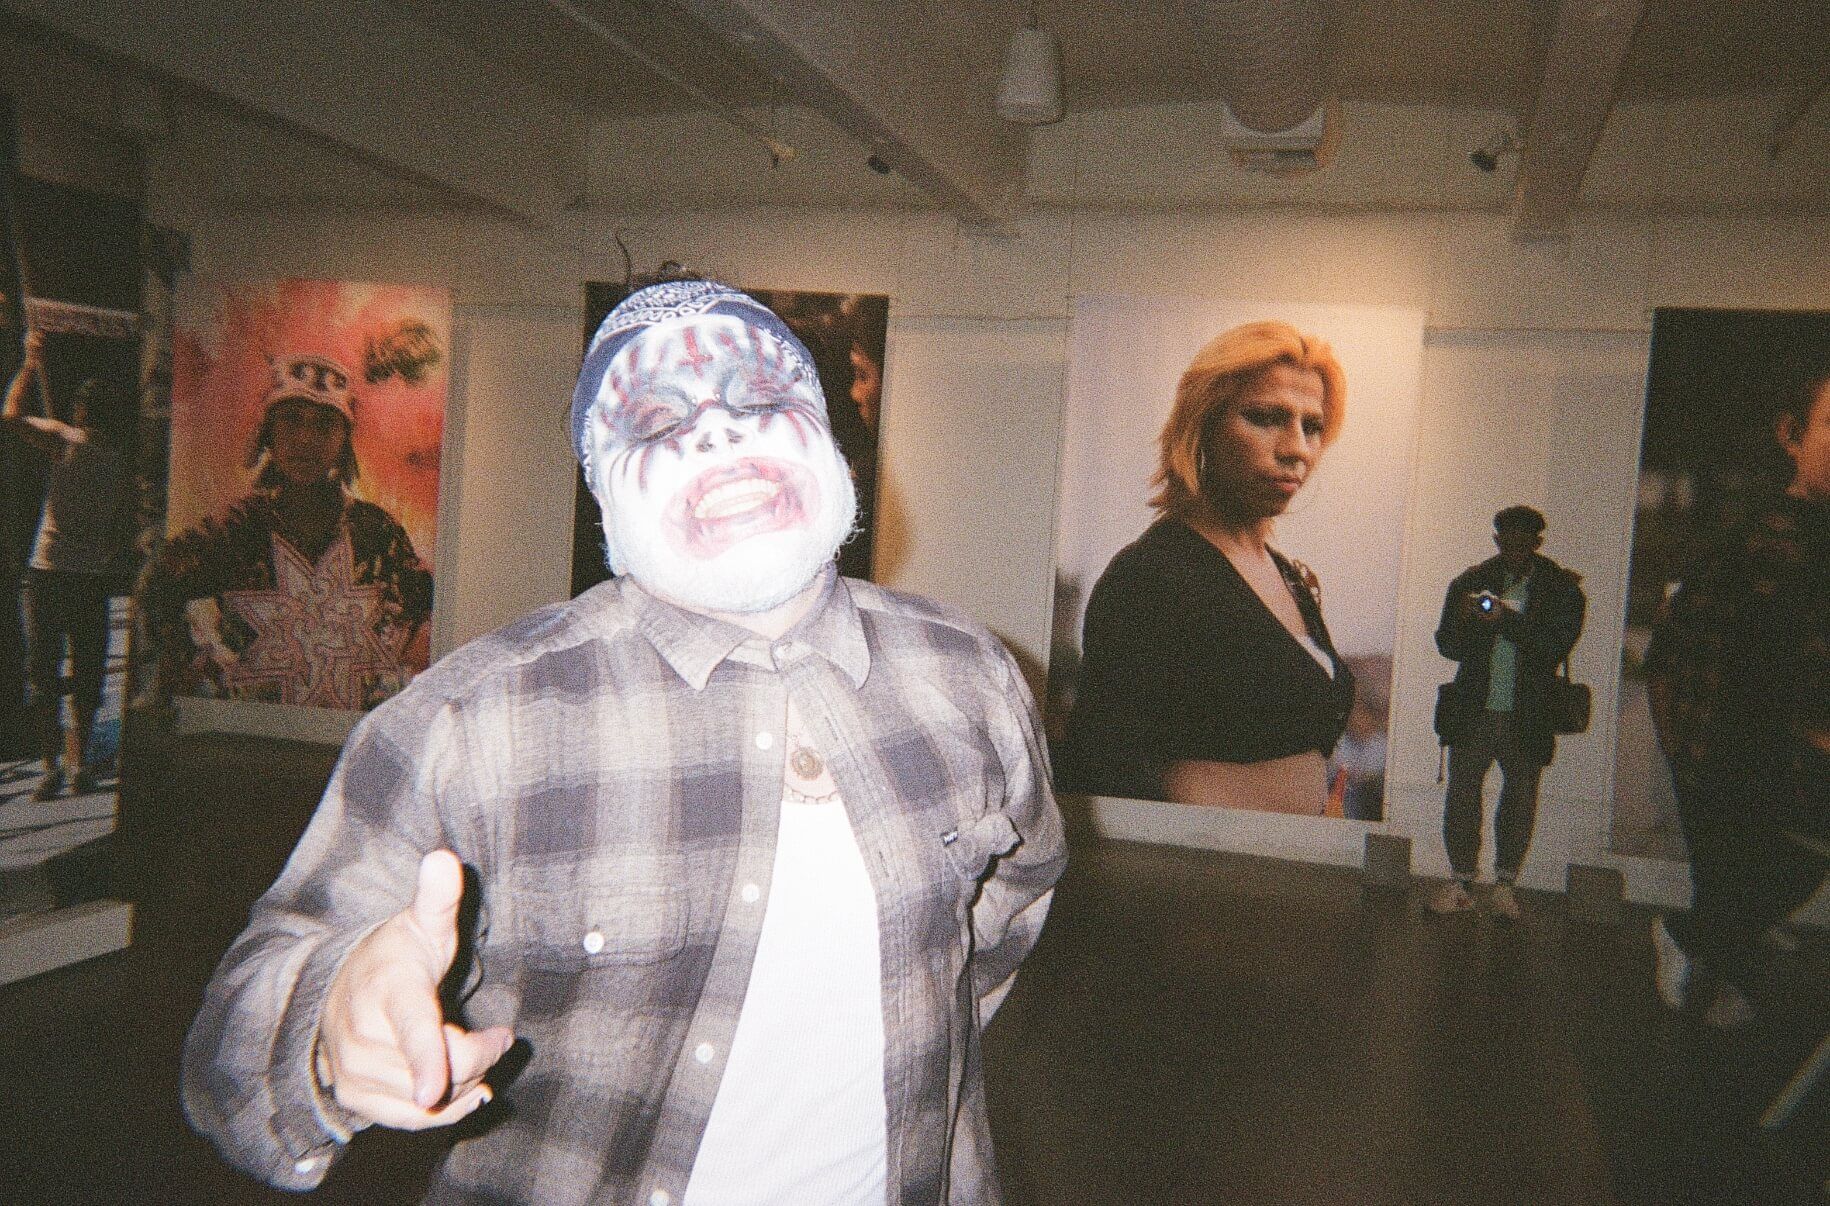 A man wearing a mask in an art gallery.